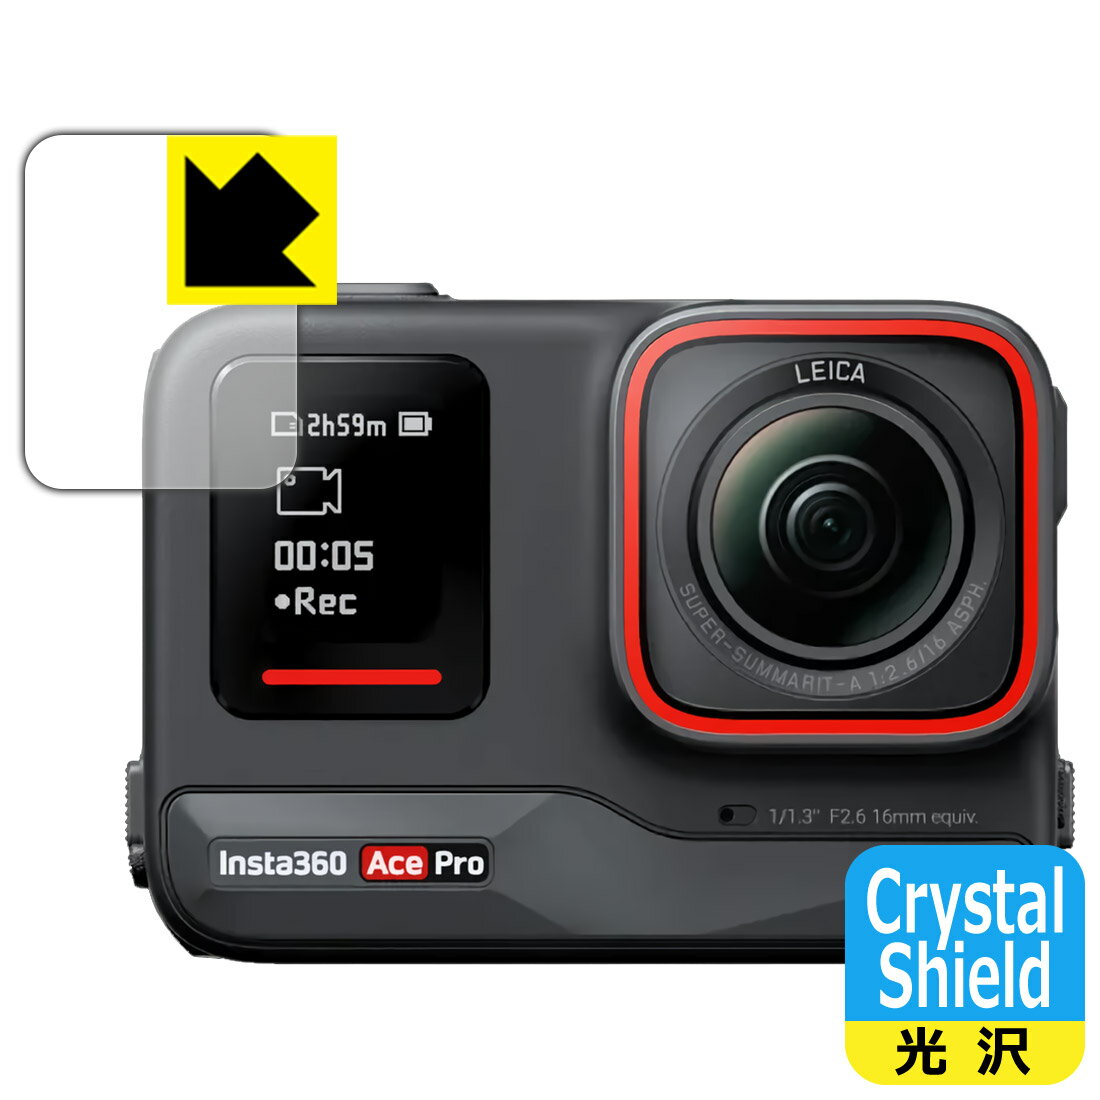 PDA工房 Insta360 Ace Pro 対応 Crystal Shield 保護 フィルム [リアタッチスクリーン用] 光沢 日本製 日本製 自社製造直販